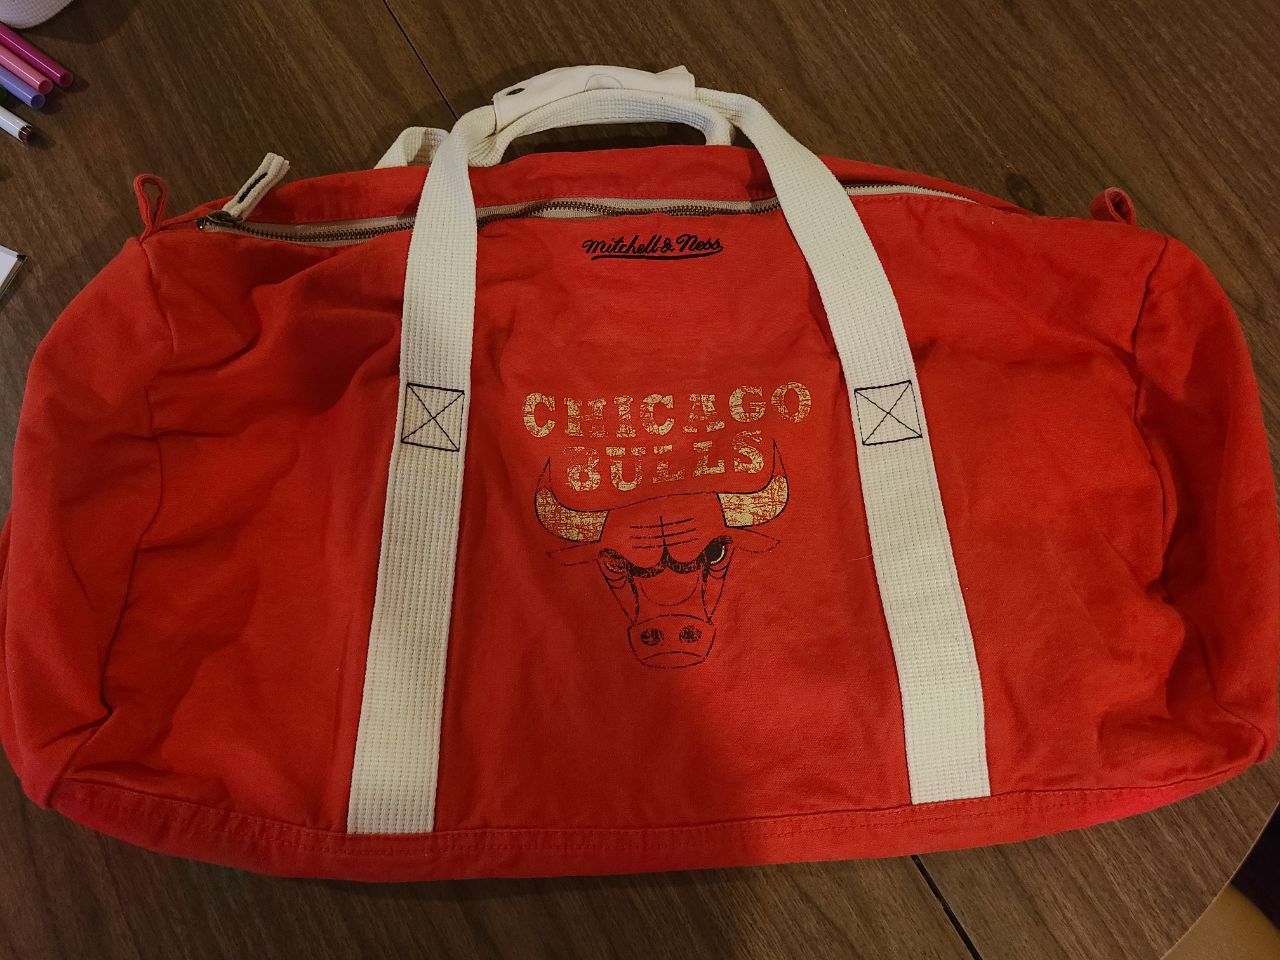 Chicago Bulls Duffle Bag 